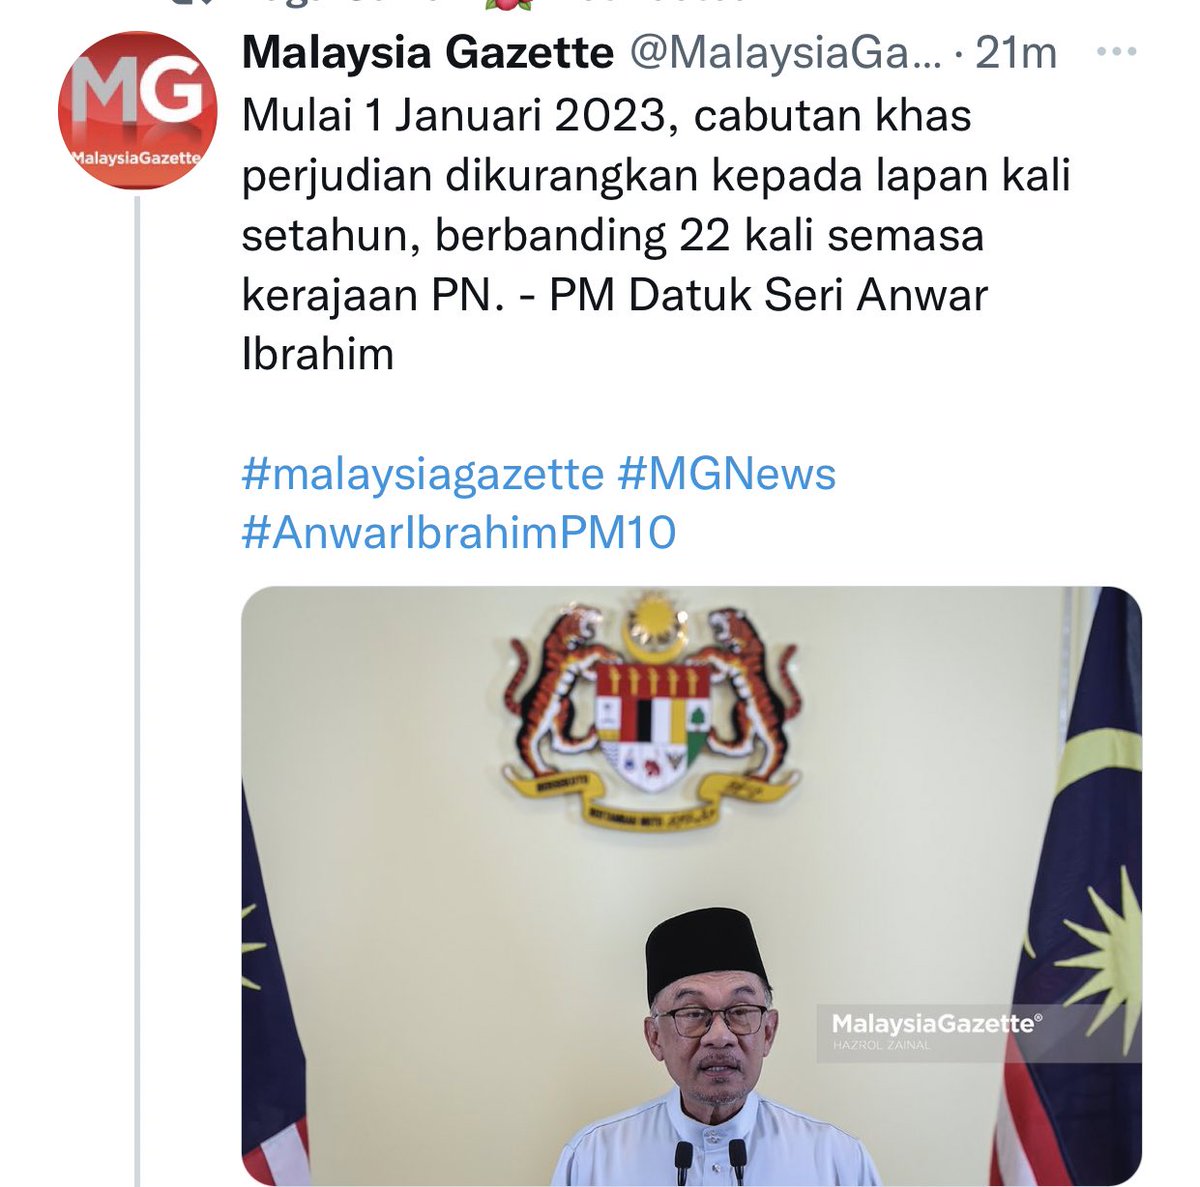 Abdul Rani Kulup Fans on Twitter: "Baru beberapa hari jadi Perdana